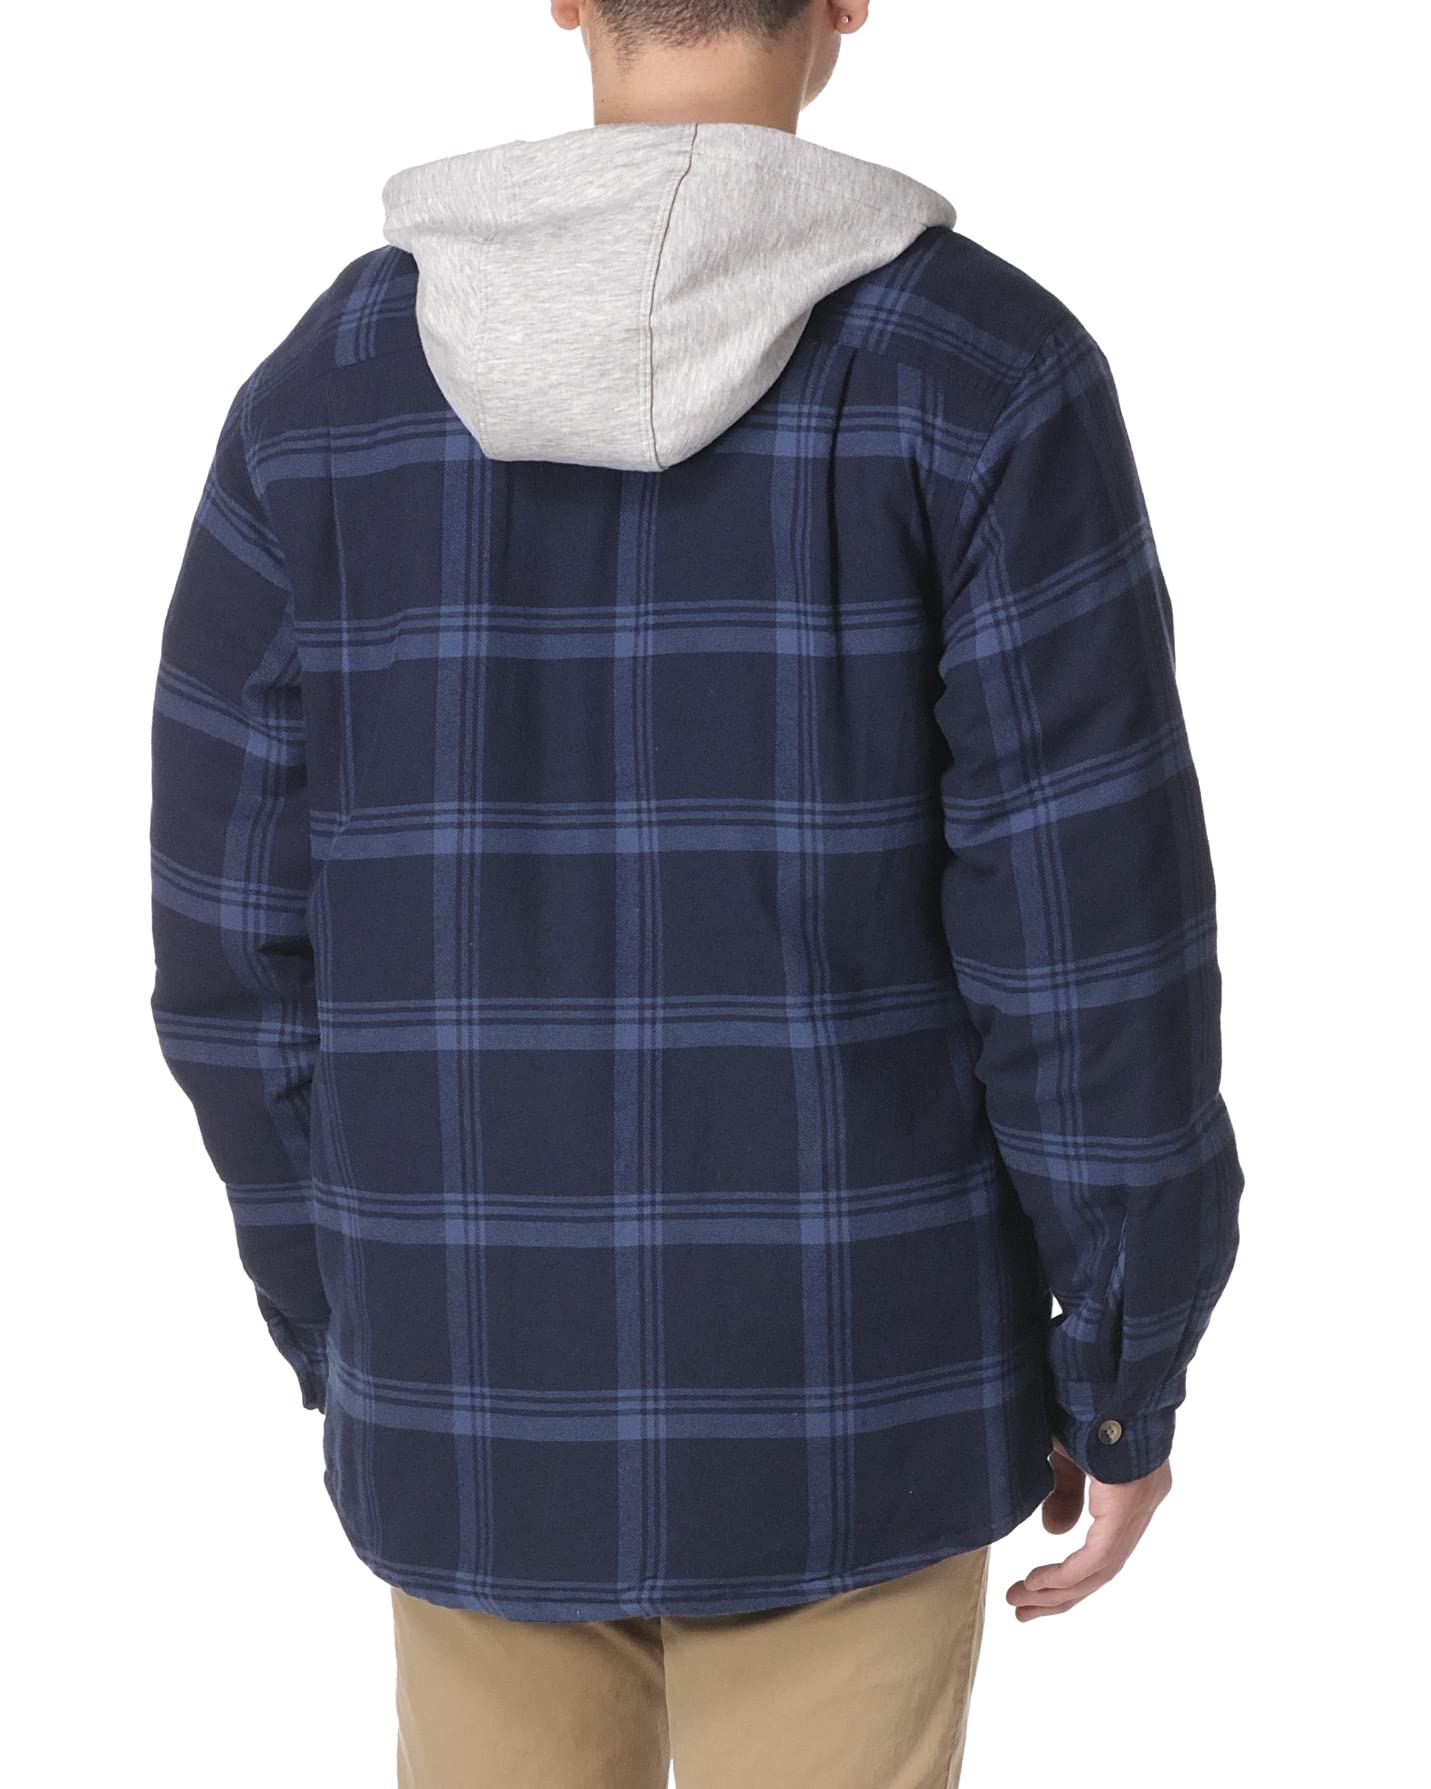 Mua Wrangler Authentics Men's Long Sleeve Quilted Lined Flannel Shirt  Jacket with Hood trên Amazon Mỹ chính hãng 2023 | Giaonhan247